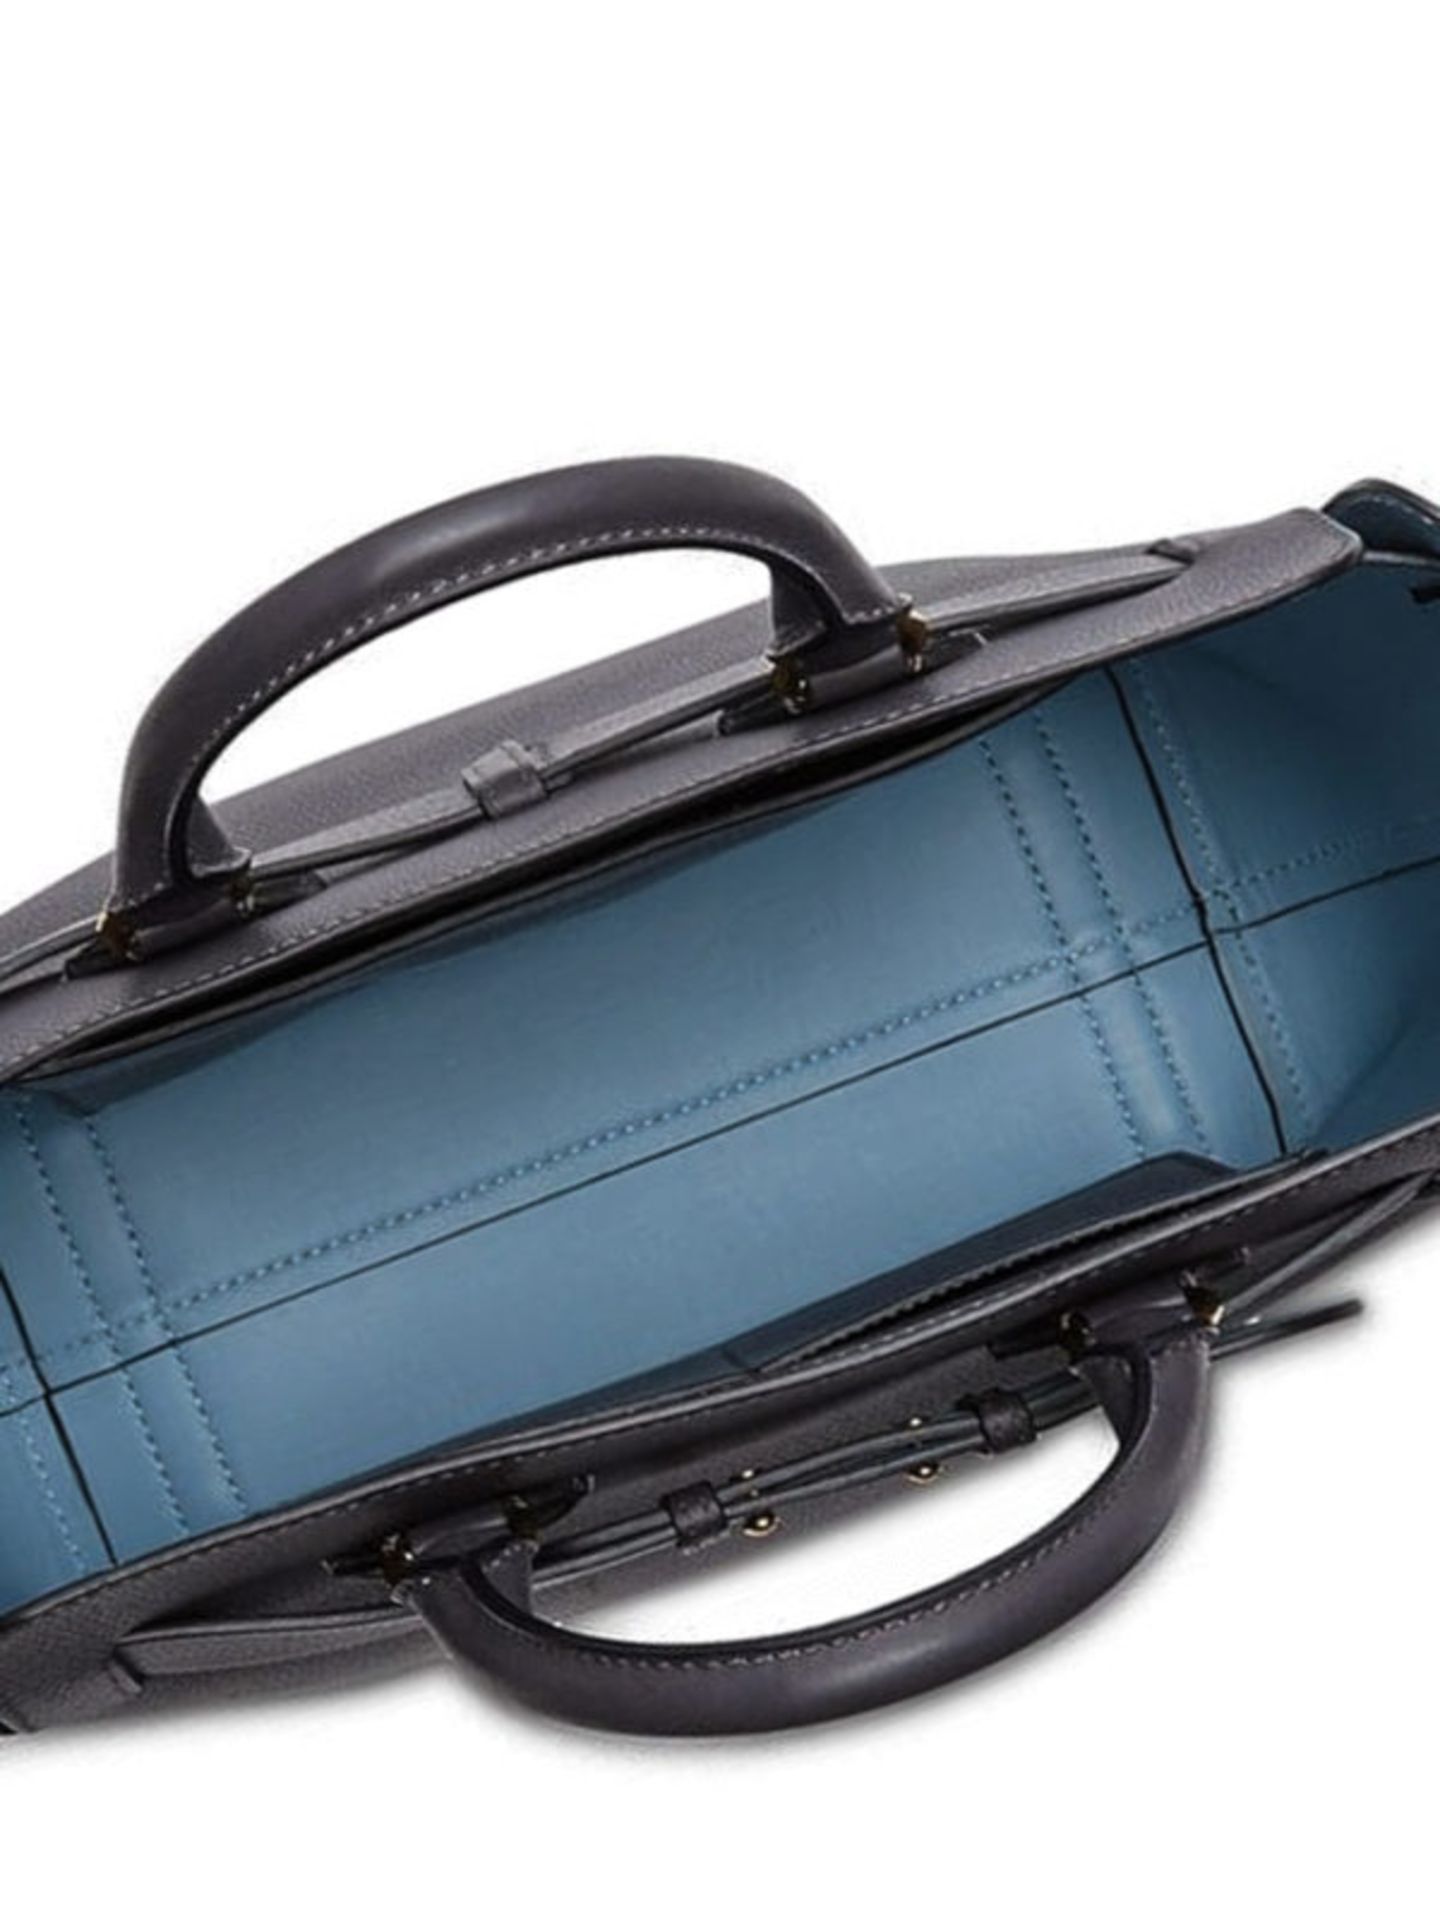 Genuine Burberry The Medium leather Belt Bag. Charcoal grey and baby blue. - Bild 4 aus 13